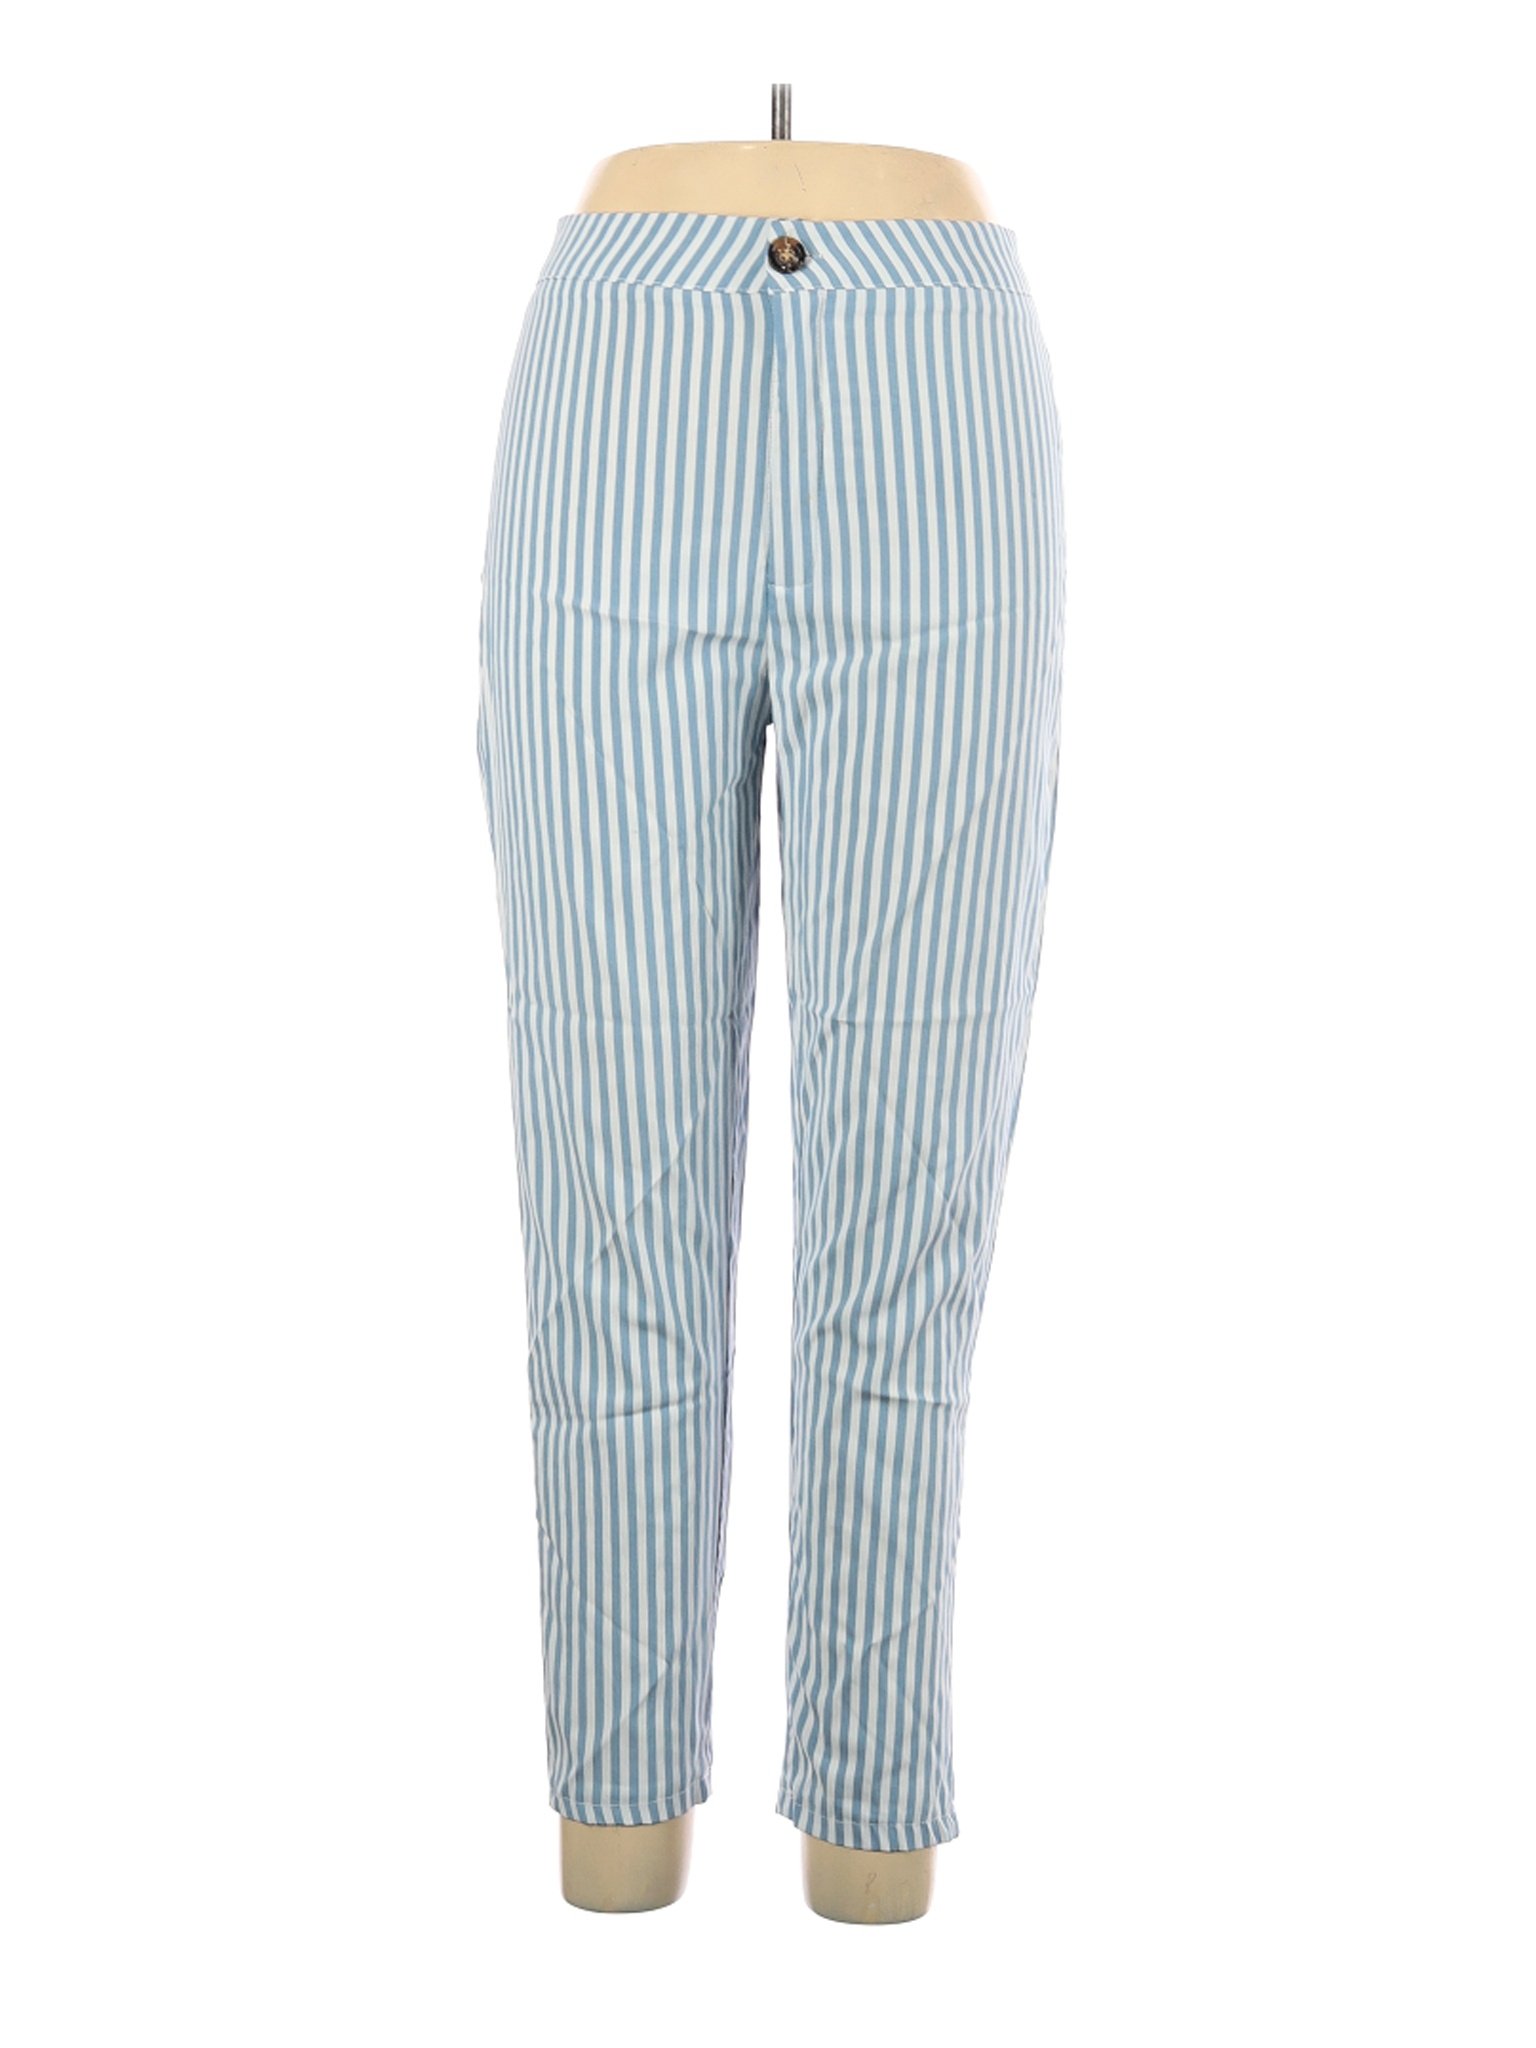 Unbranded Women Blue Casual Pants L | eBay